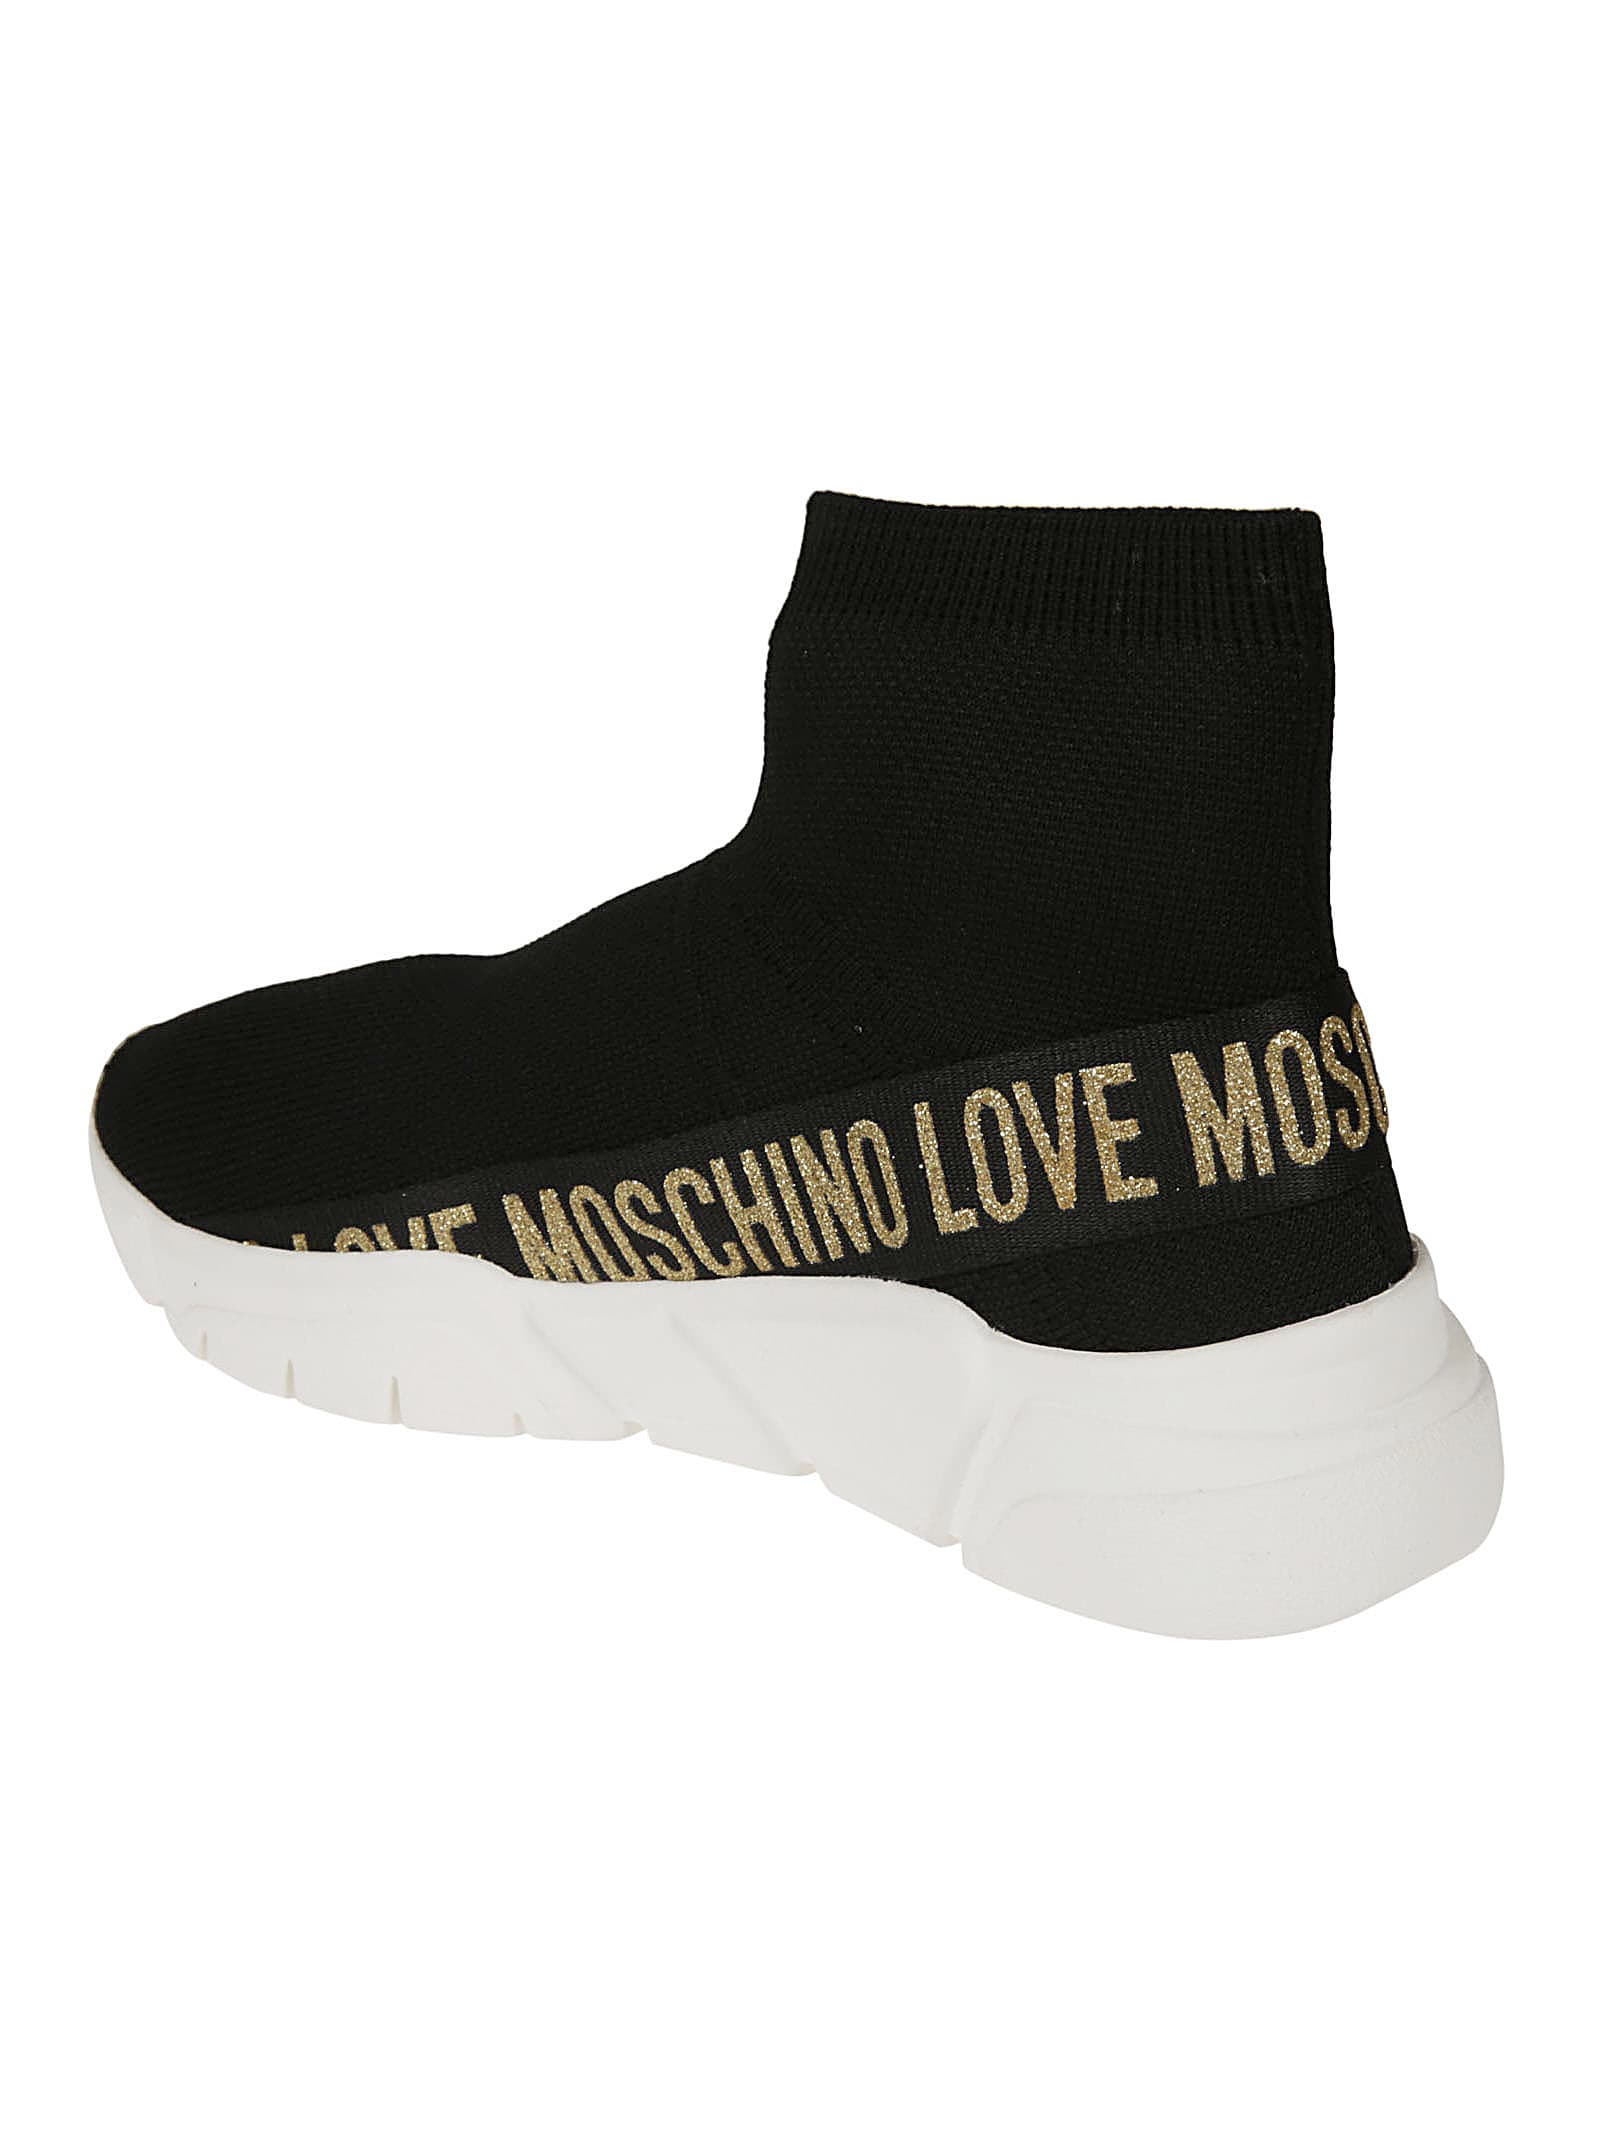 love moschino sock sneaker